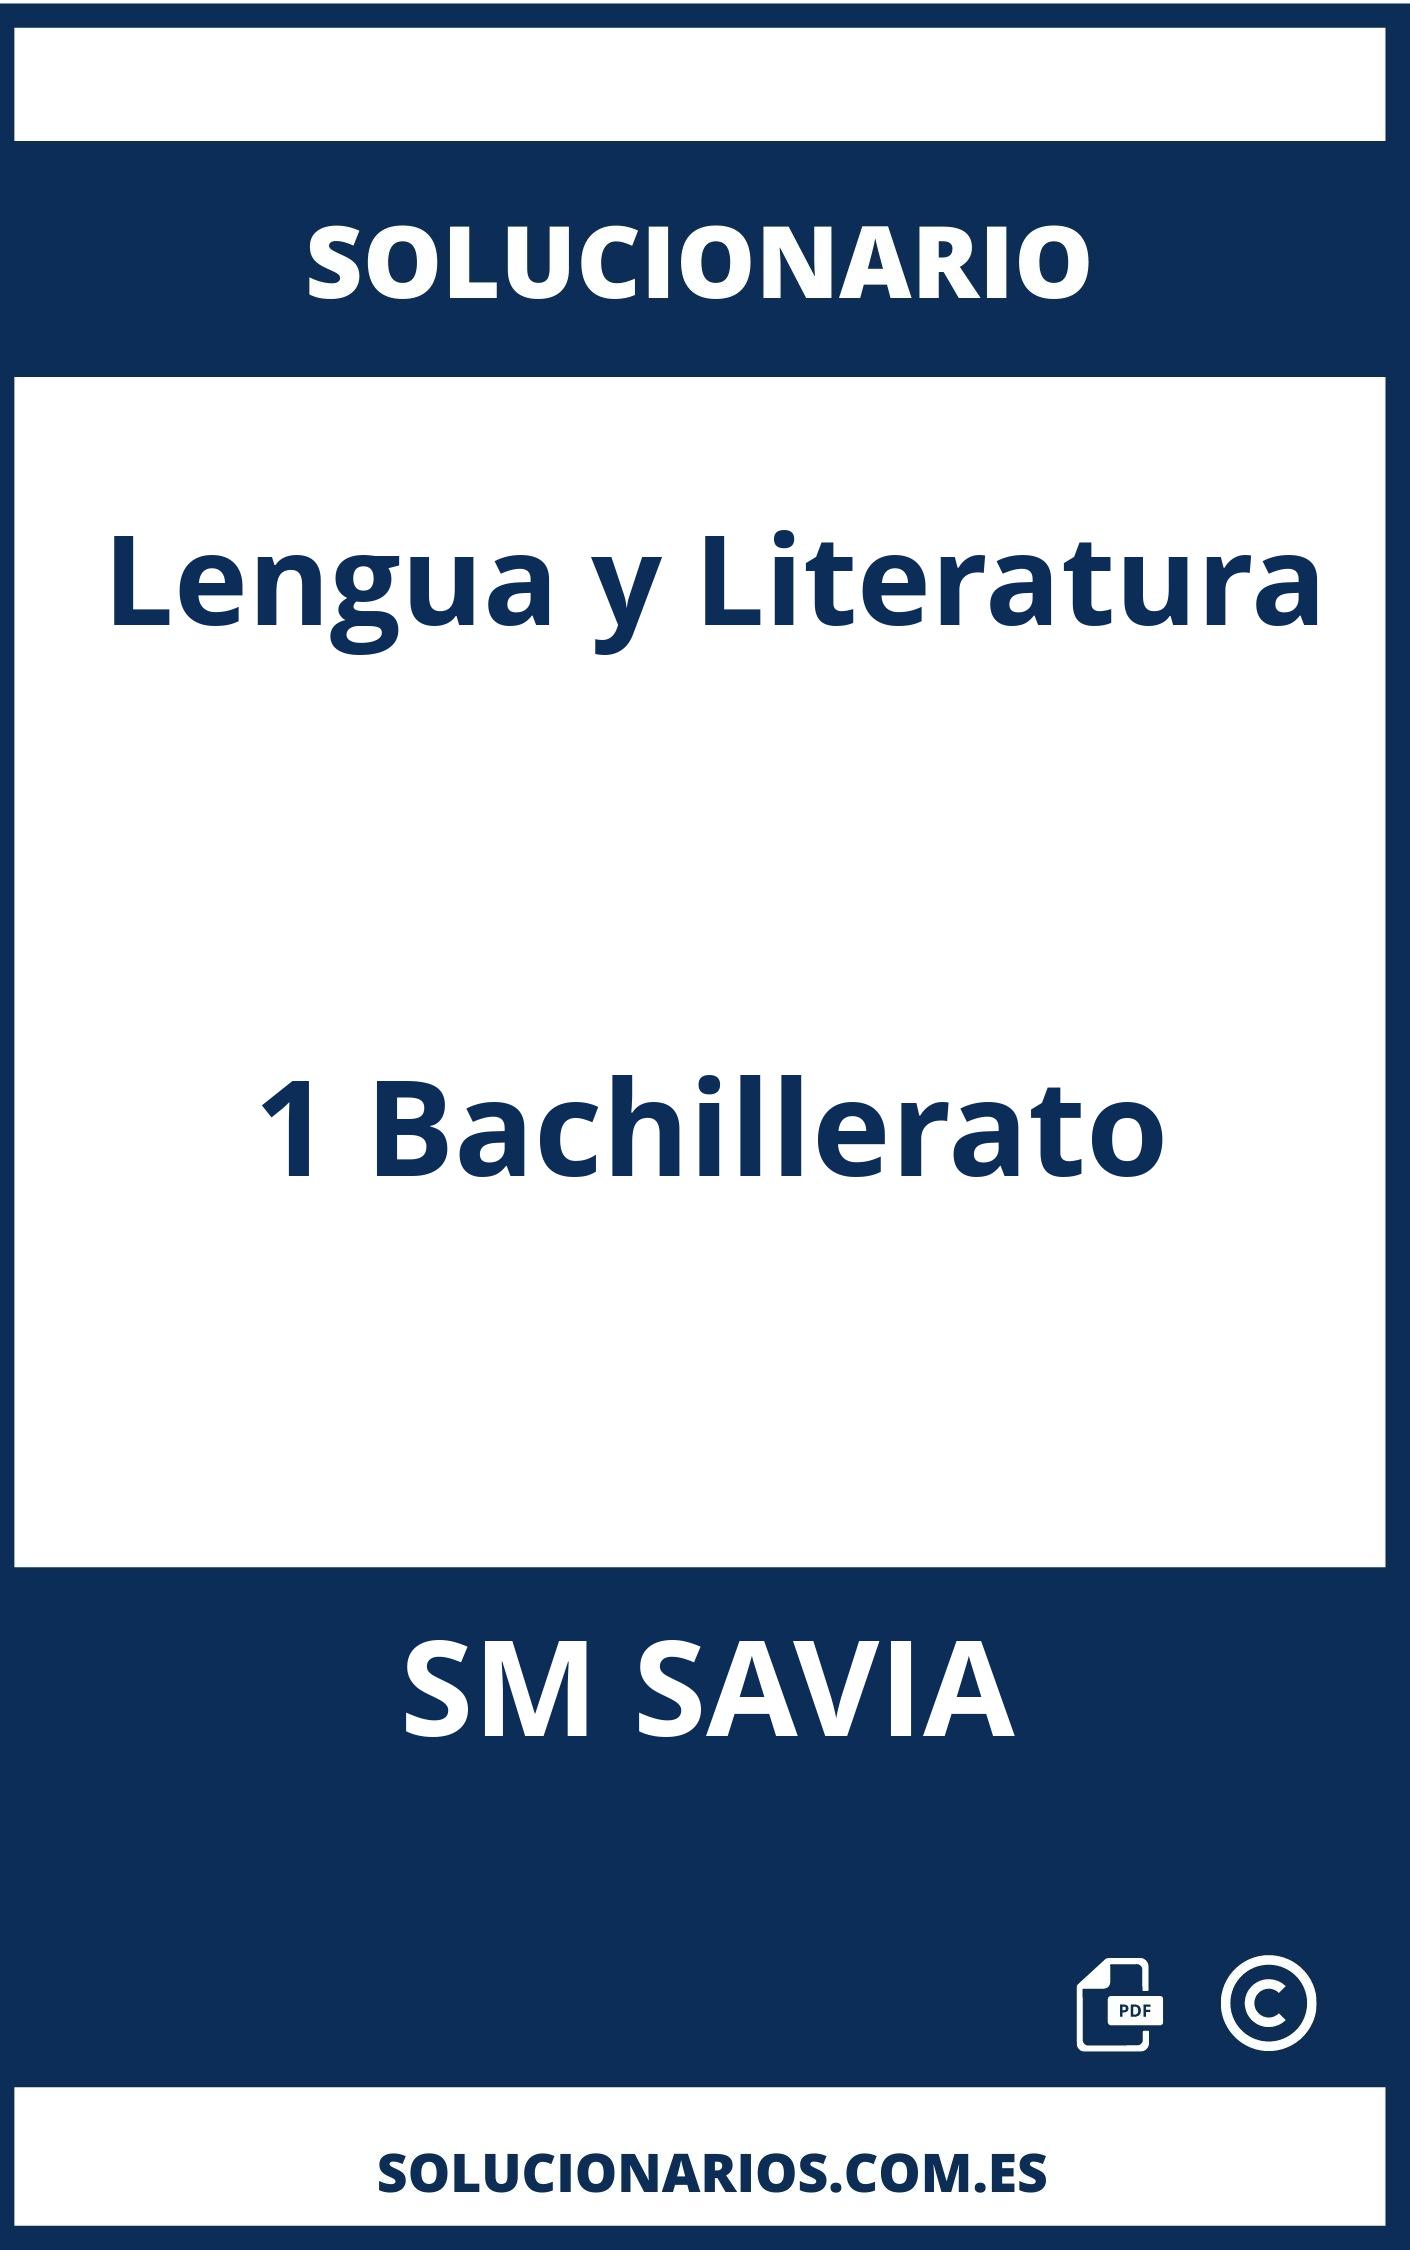 Solucionario Lengua y Literatura 1 Bachillerato SM SAVIA